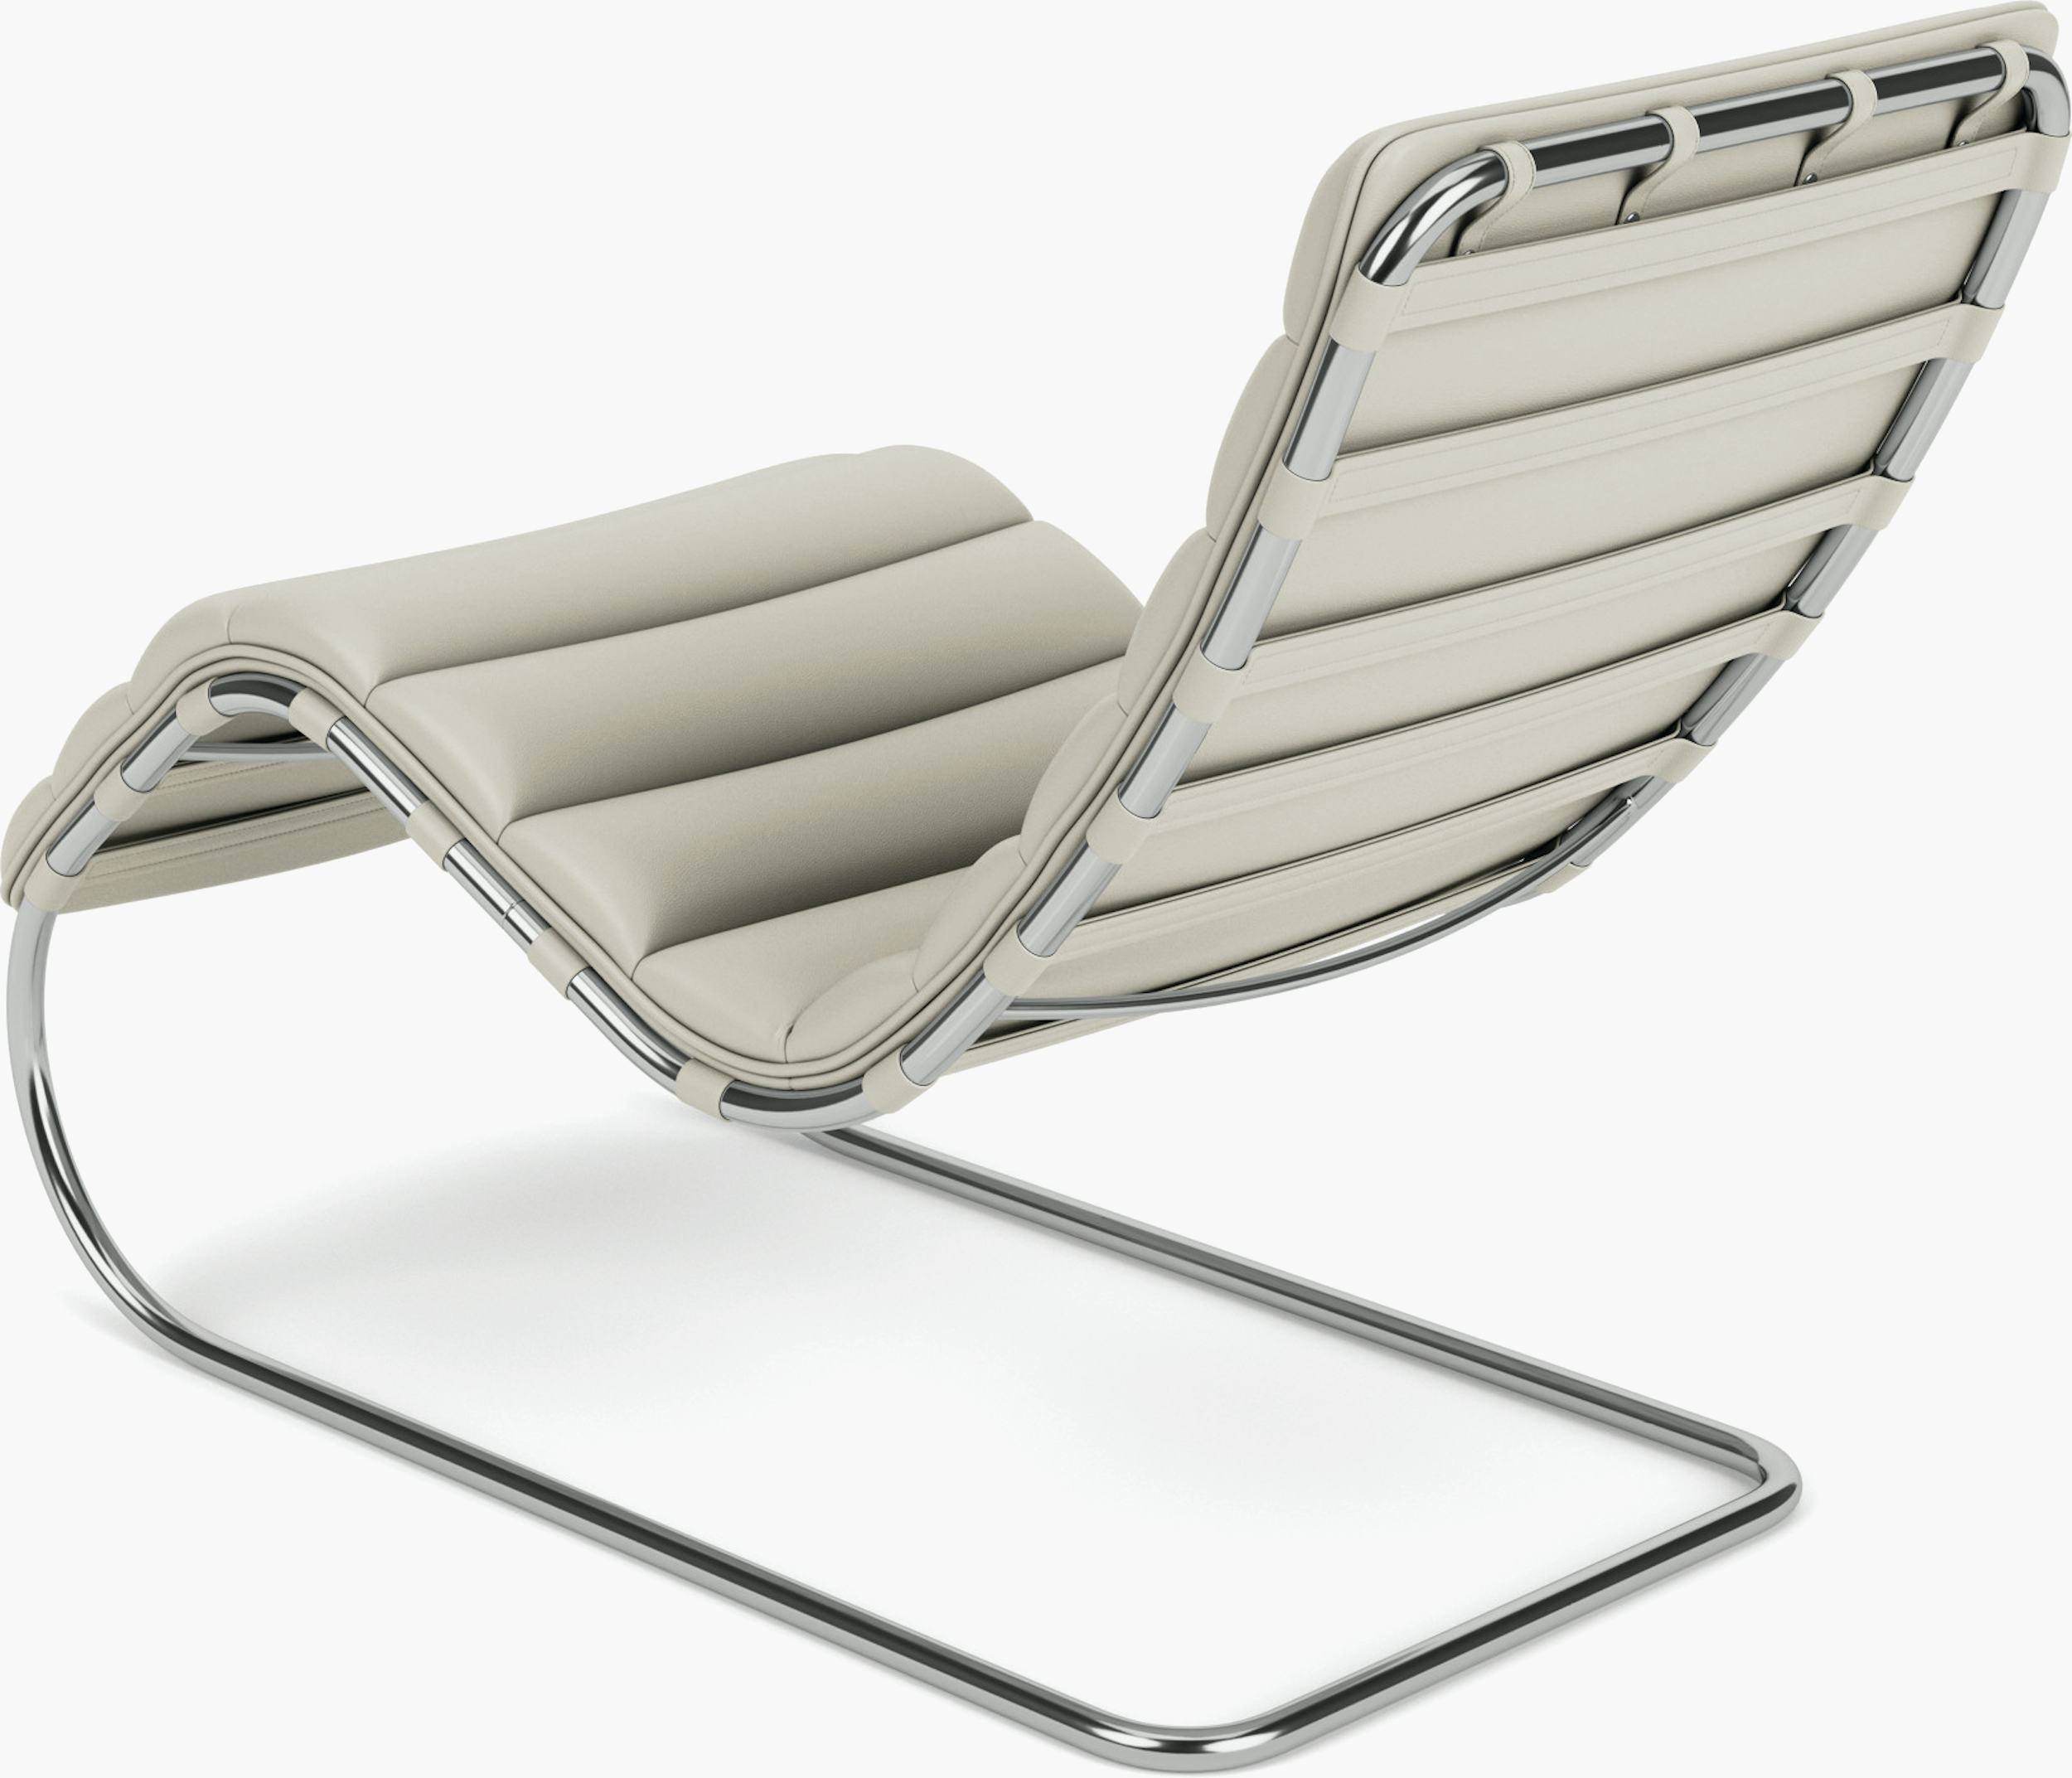 MR Chaise Lounge - Original Design